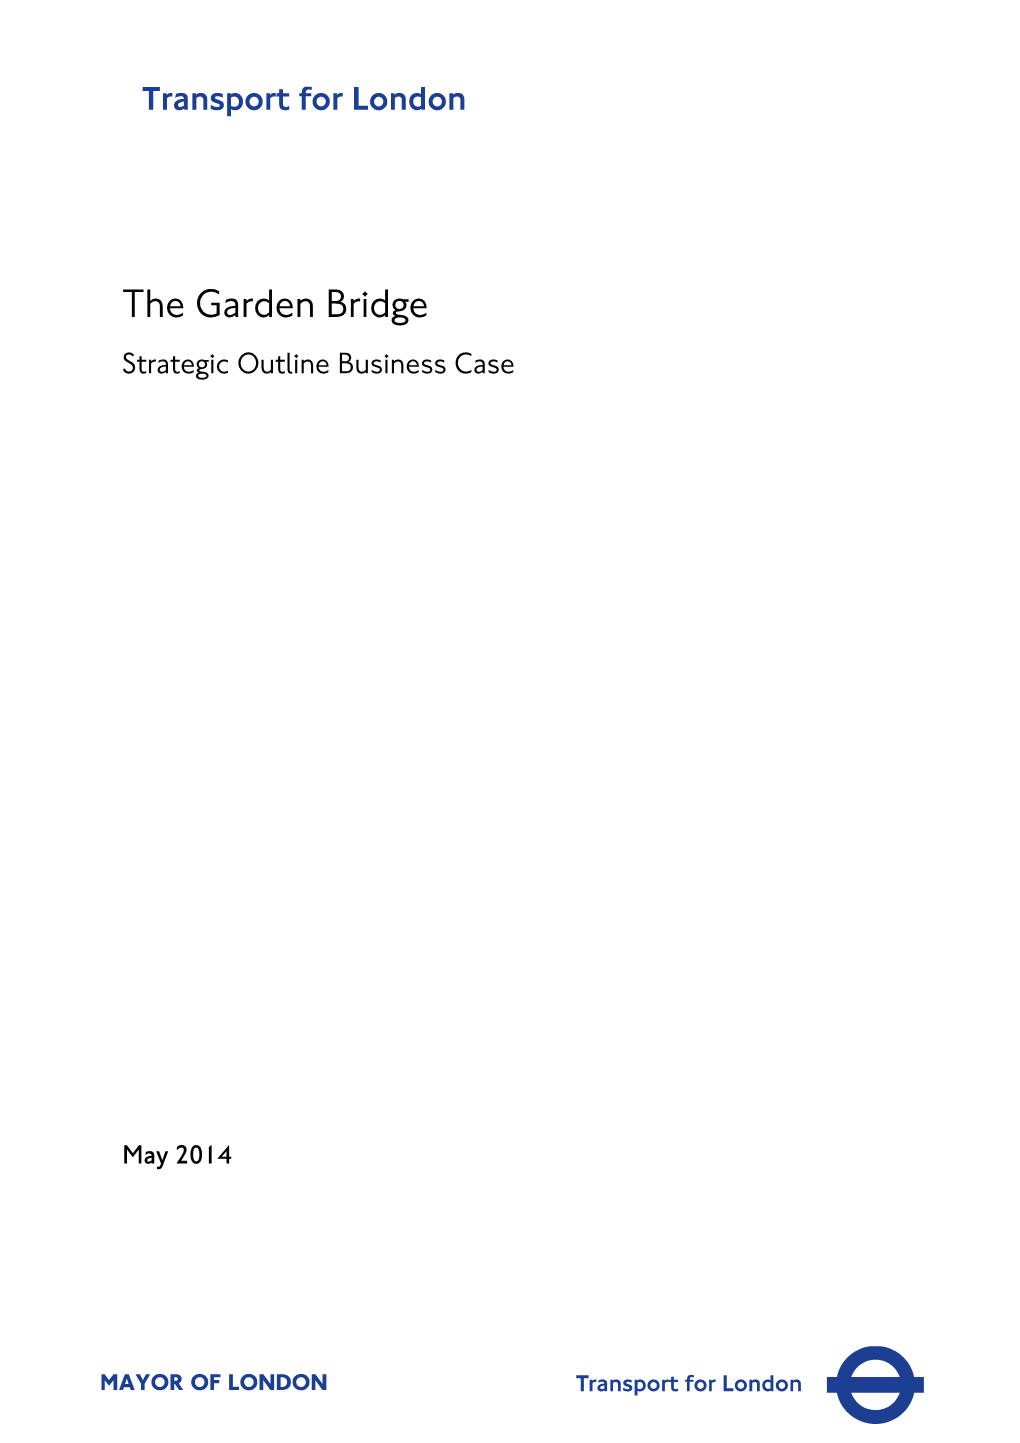 The Garden Bridge Strategic Outline Business Case